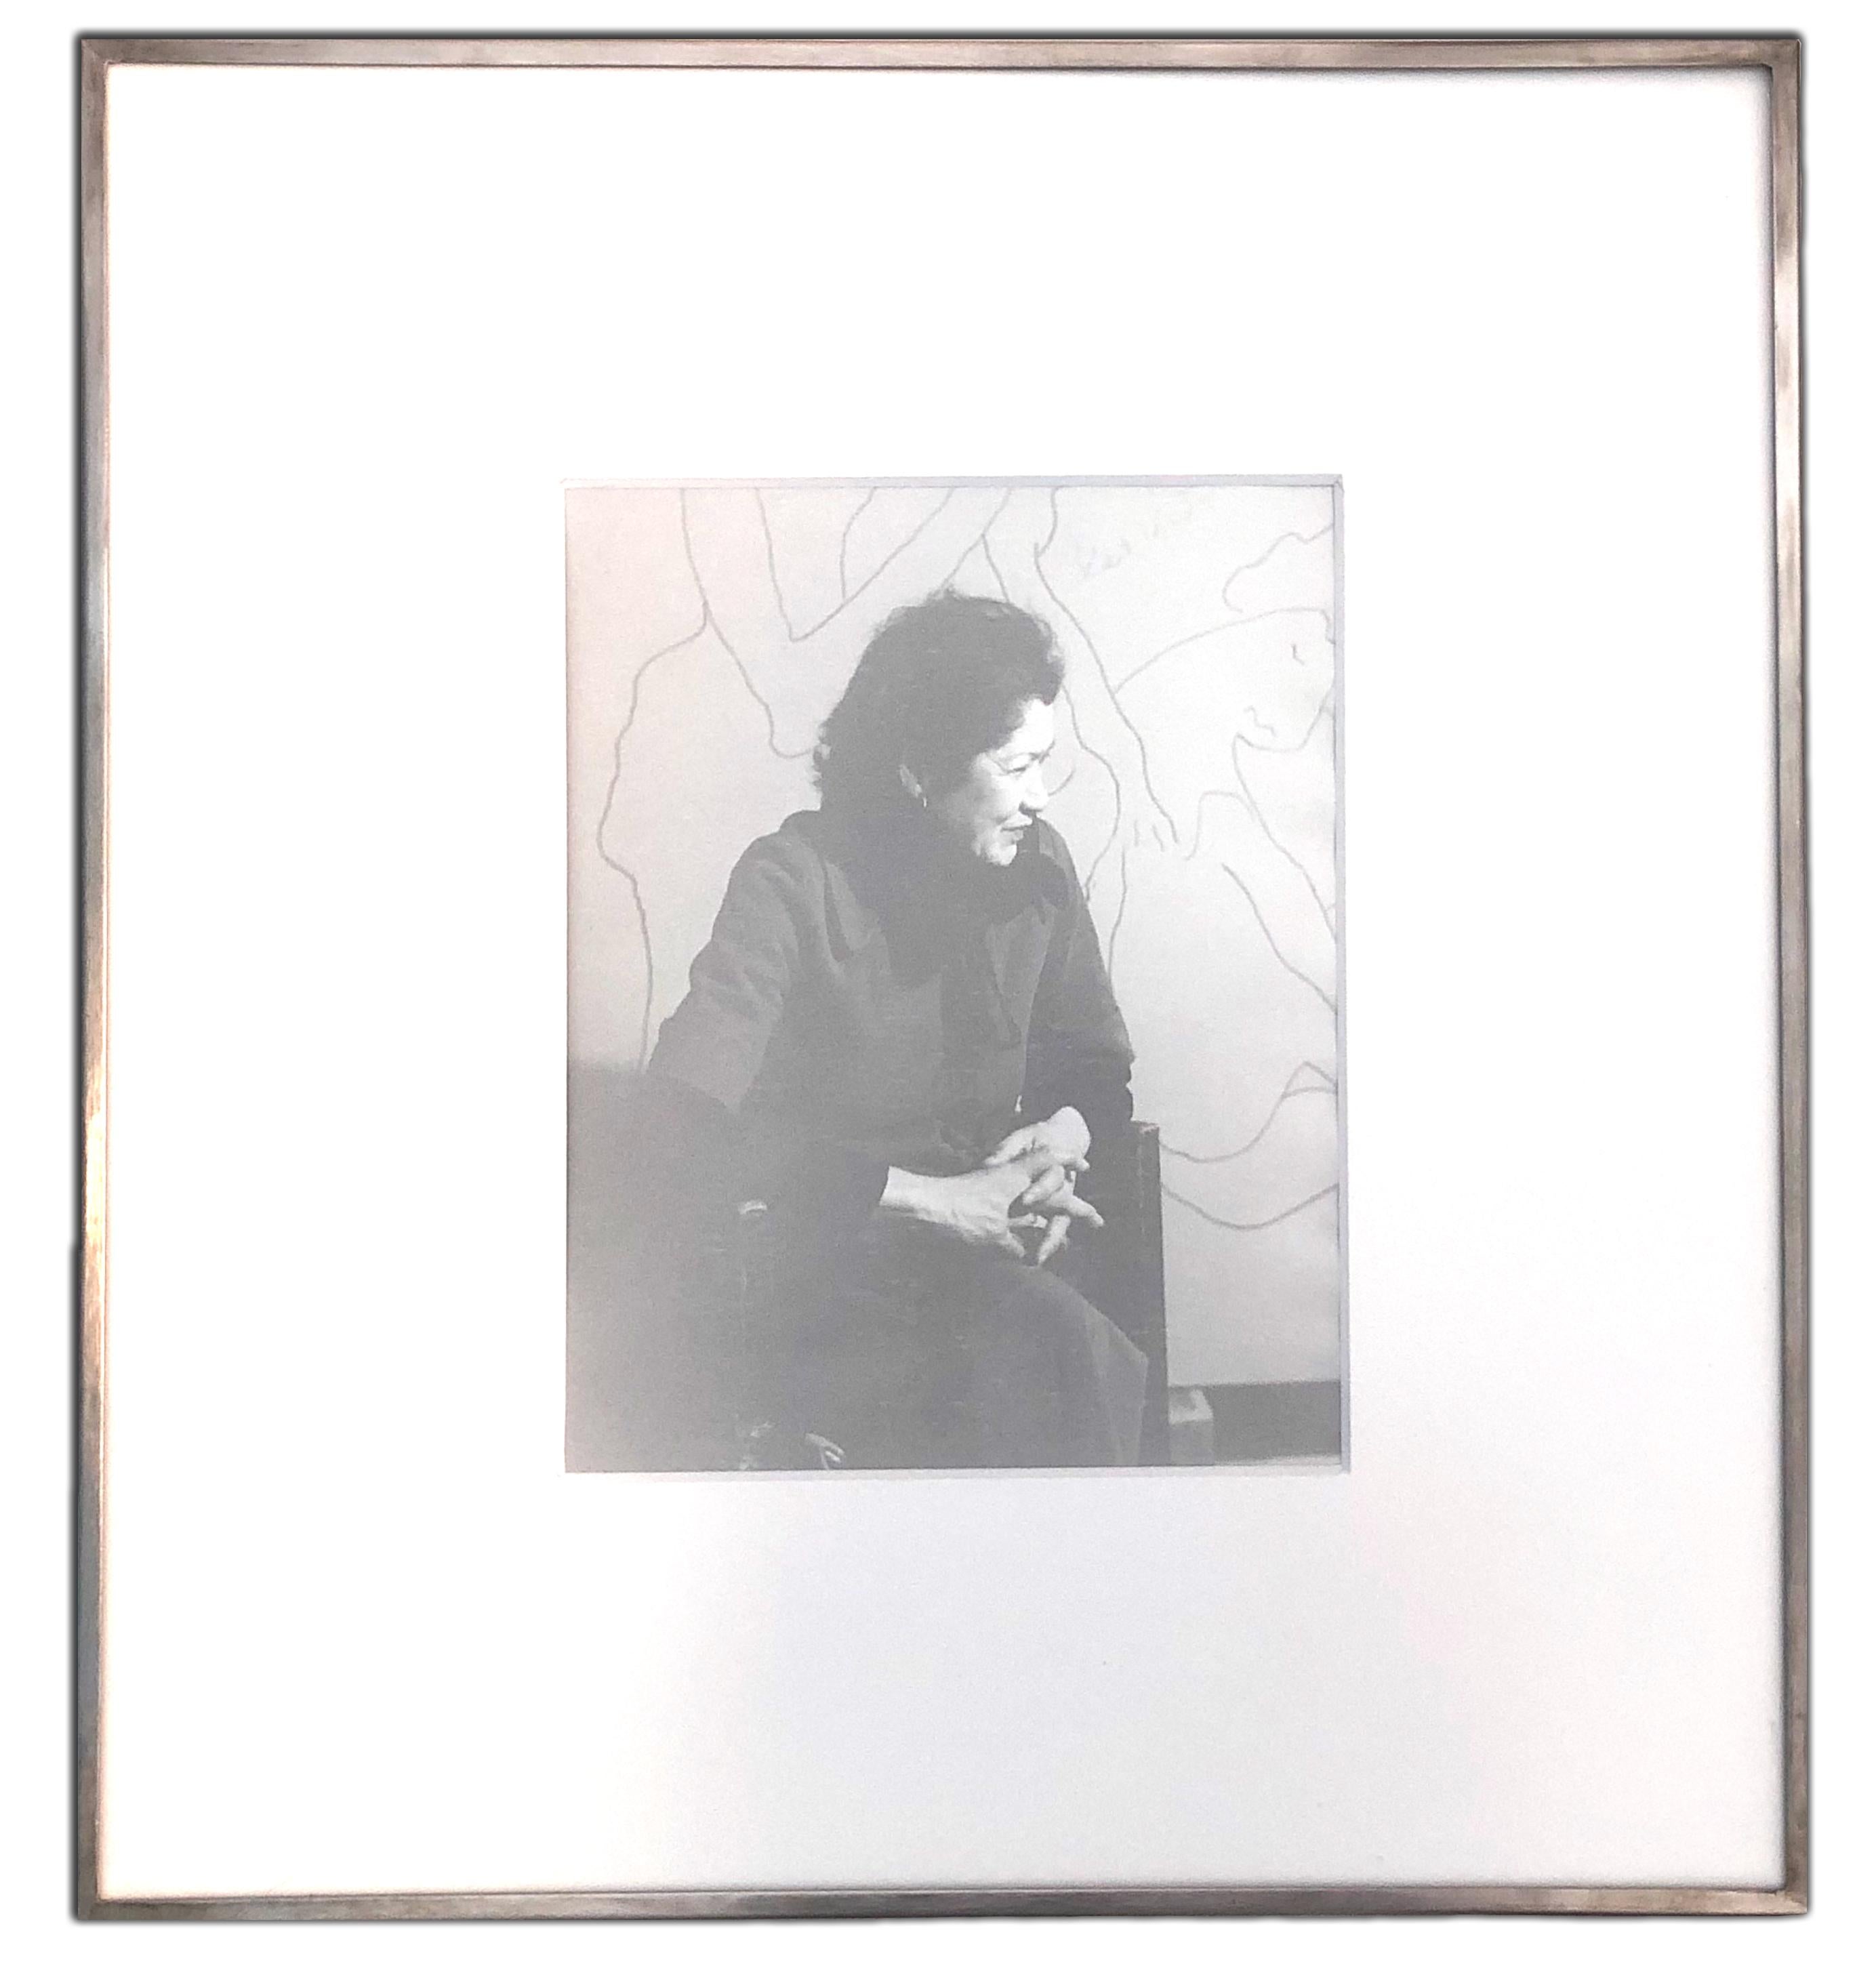 Man Ray Portrait Photograph - Untitled Portrait of Female, Silver Gelatin Print